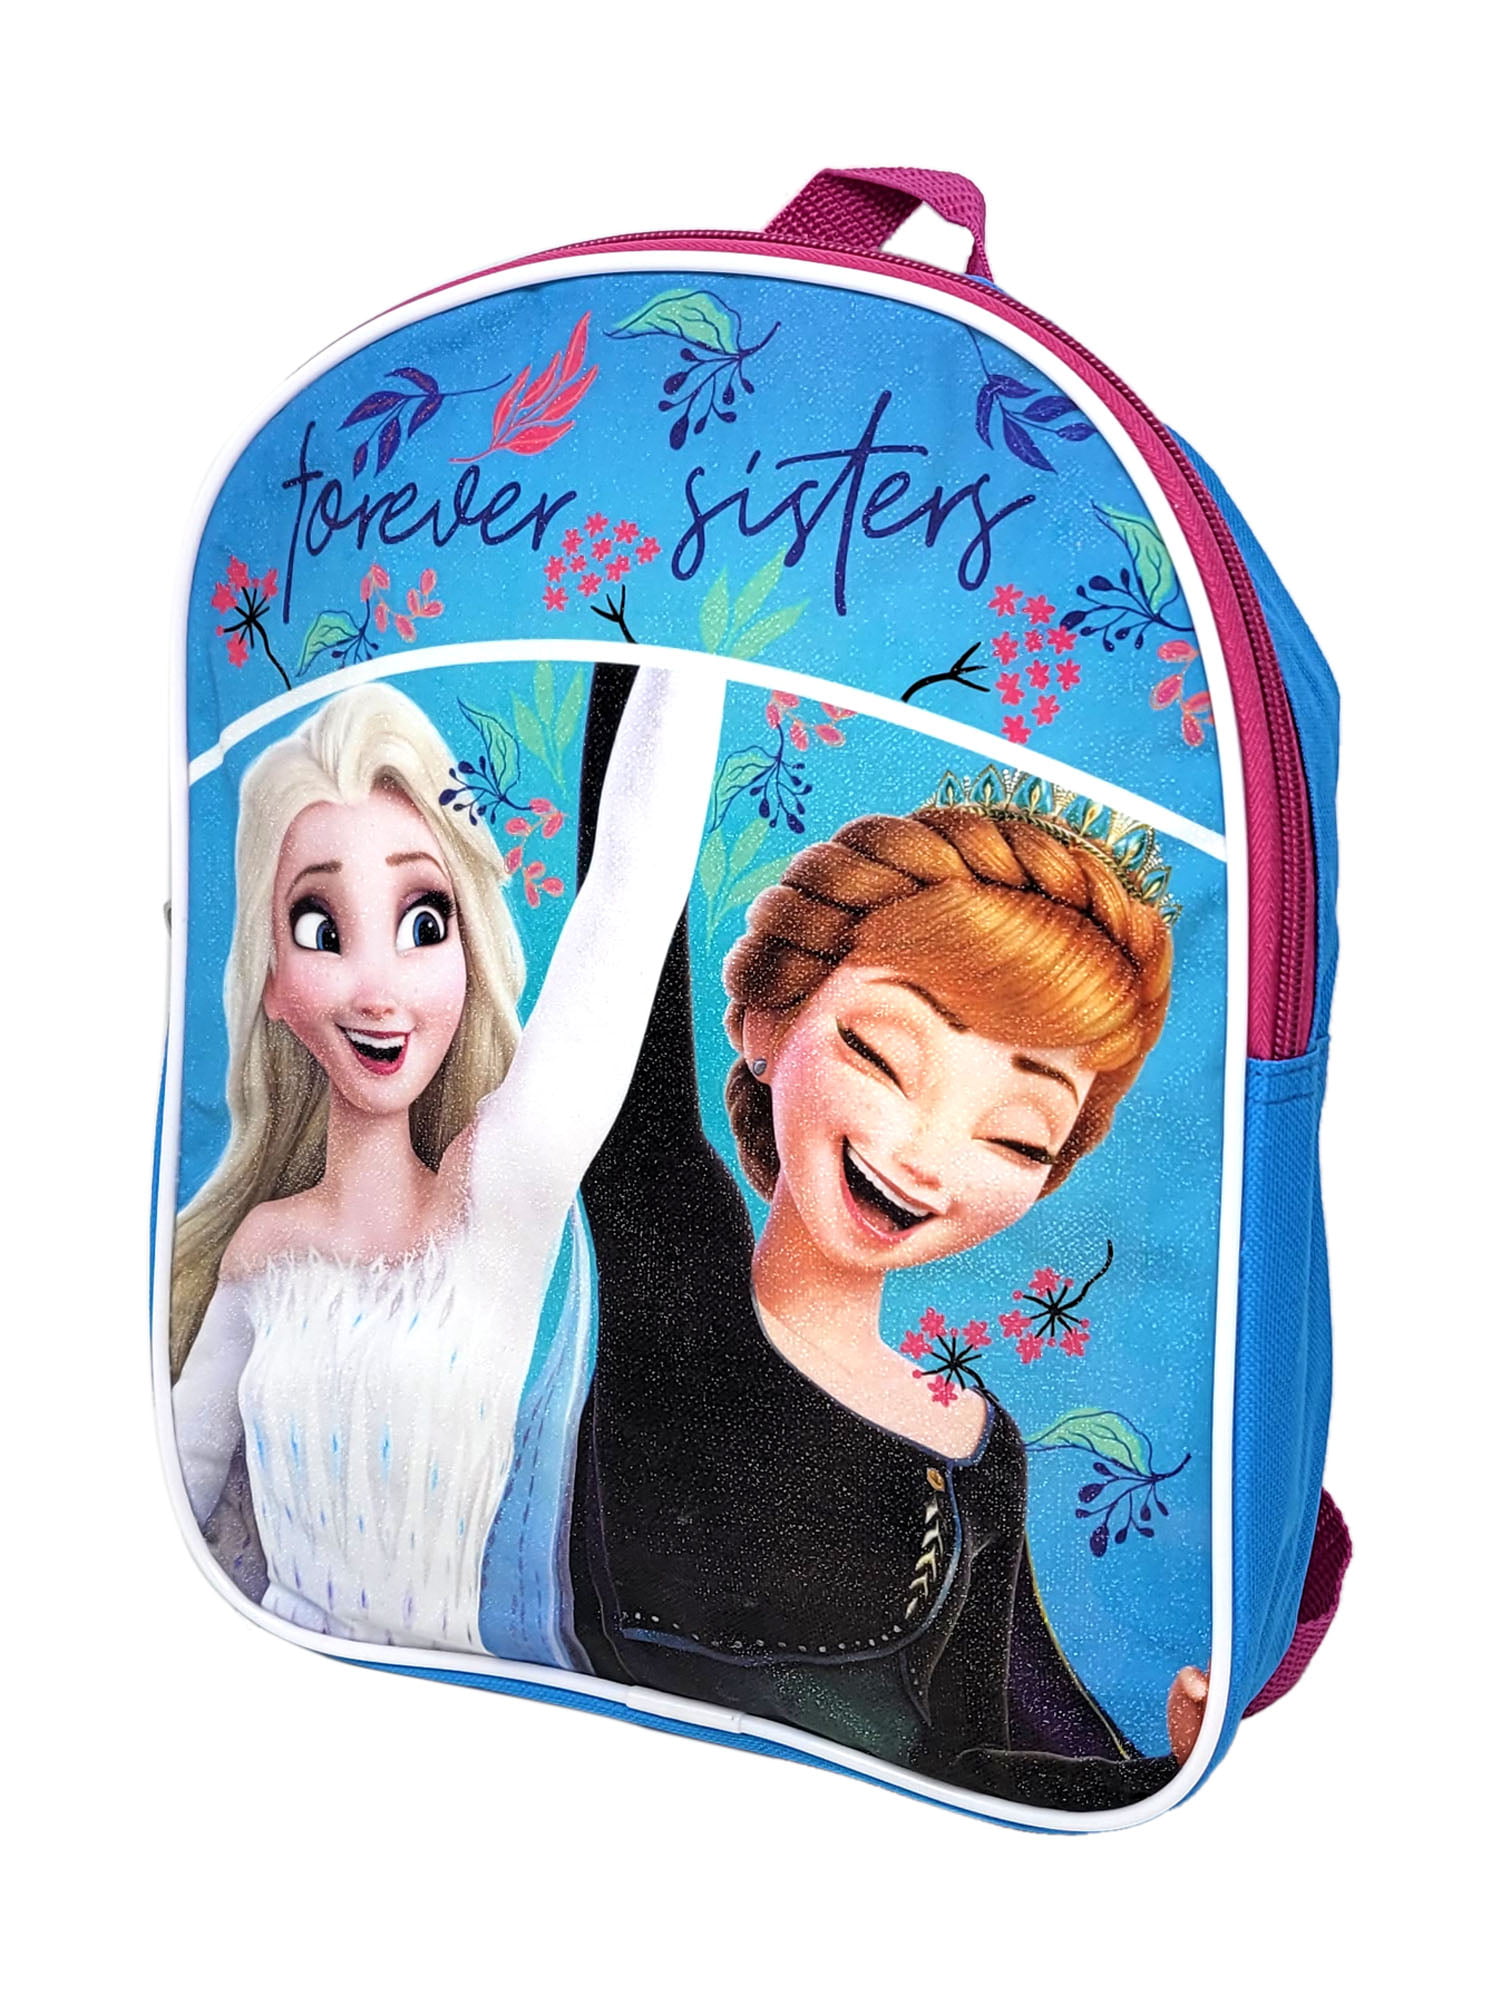 Walt Disney Studio Frozen Mini Backpack for Girls, Kids ~ 4 PC Bundle with 11in School Bag, 300 Stickers, Coloring Pages, Disney Frozen Backpack